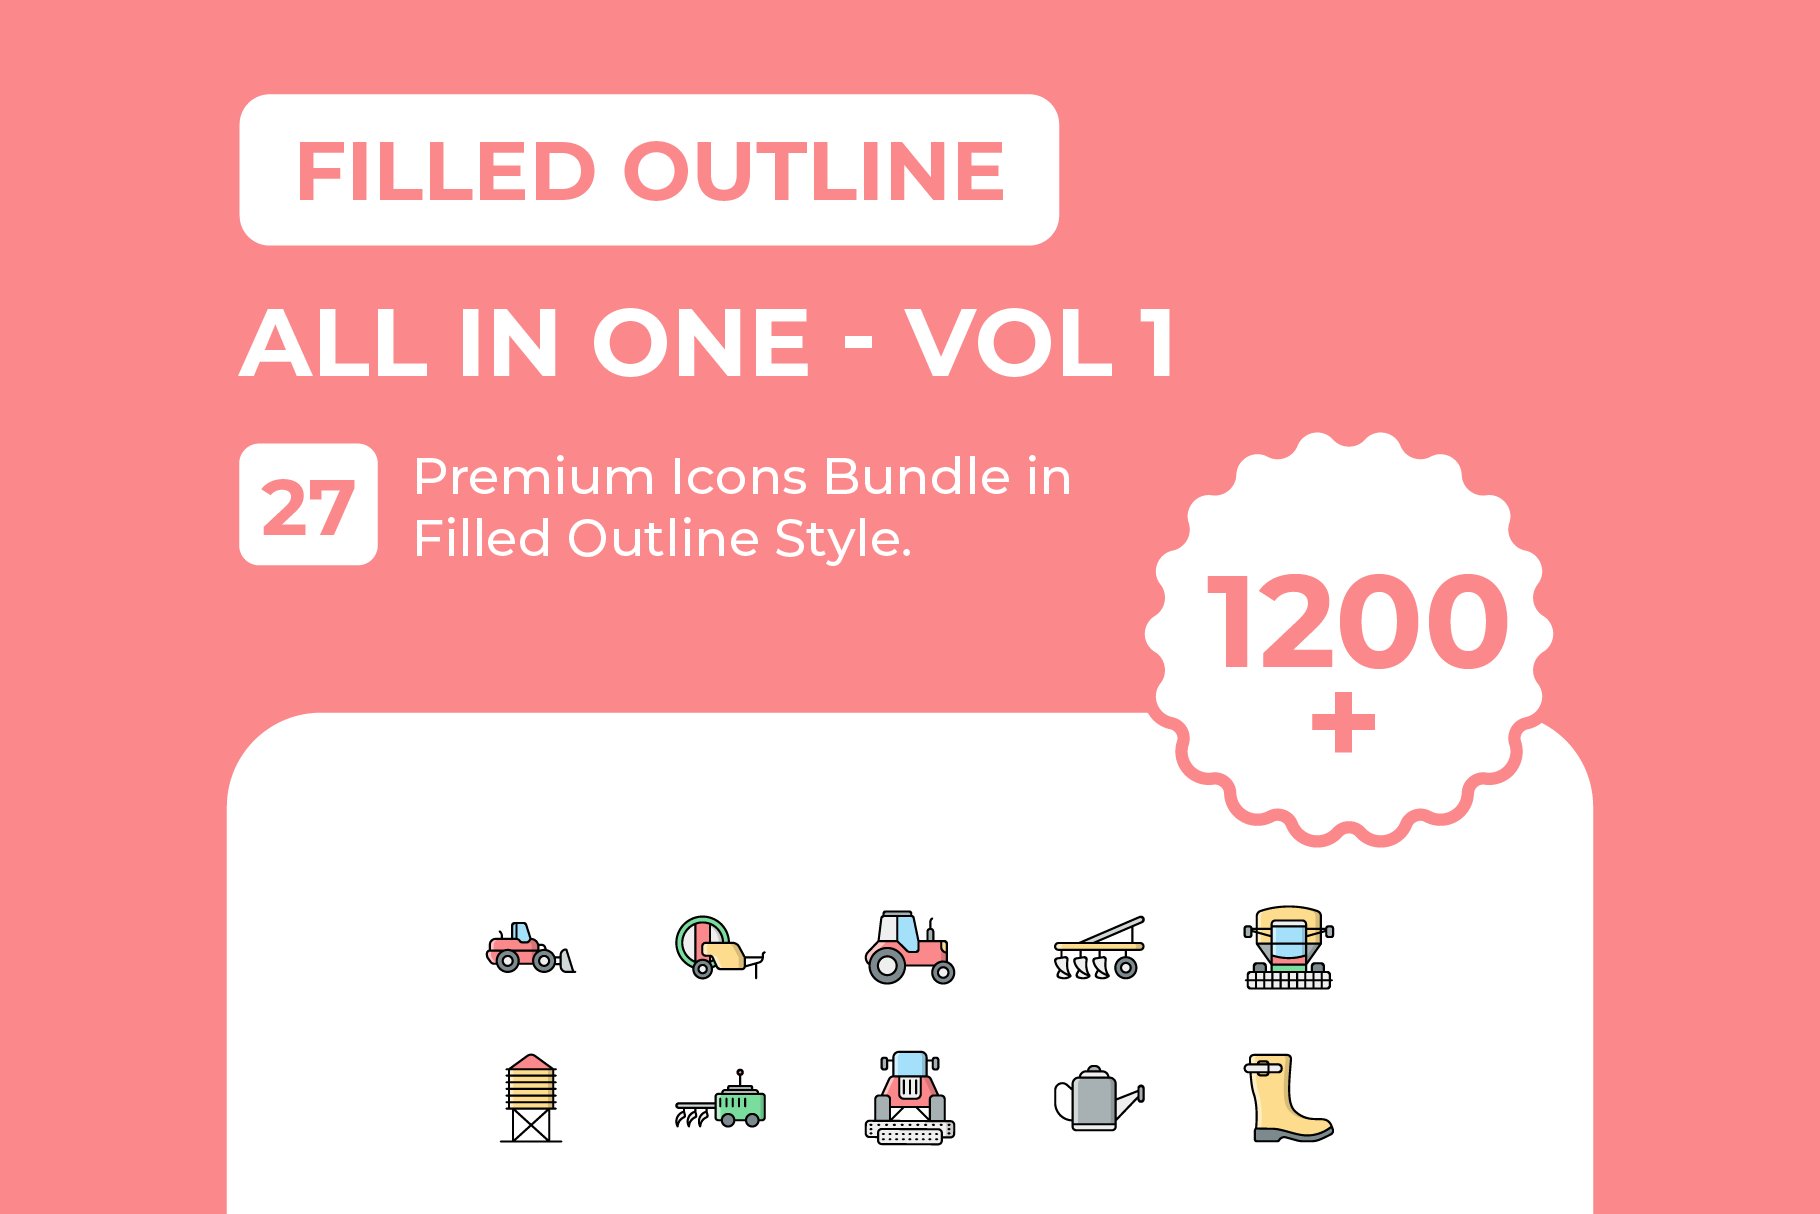 Filled Outline Icons Big Bundle cover image.